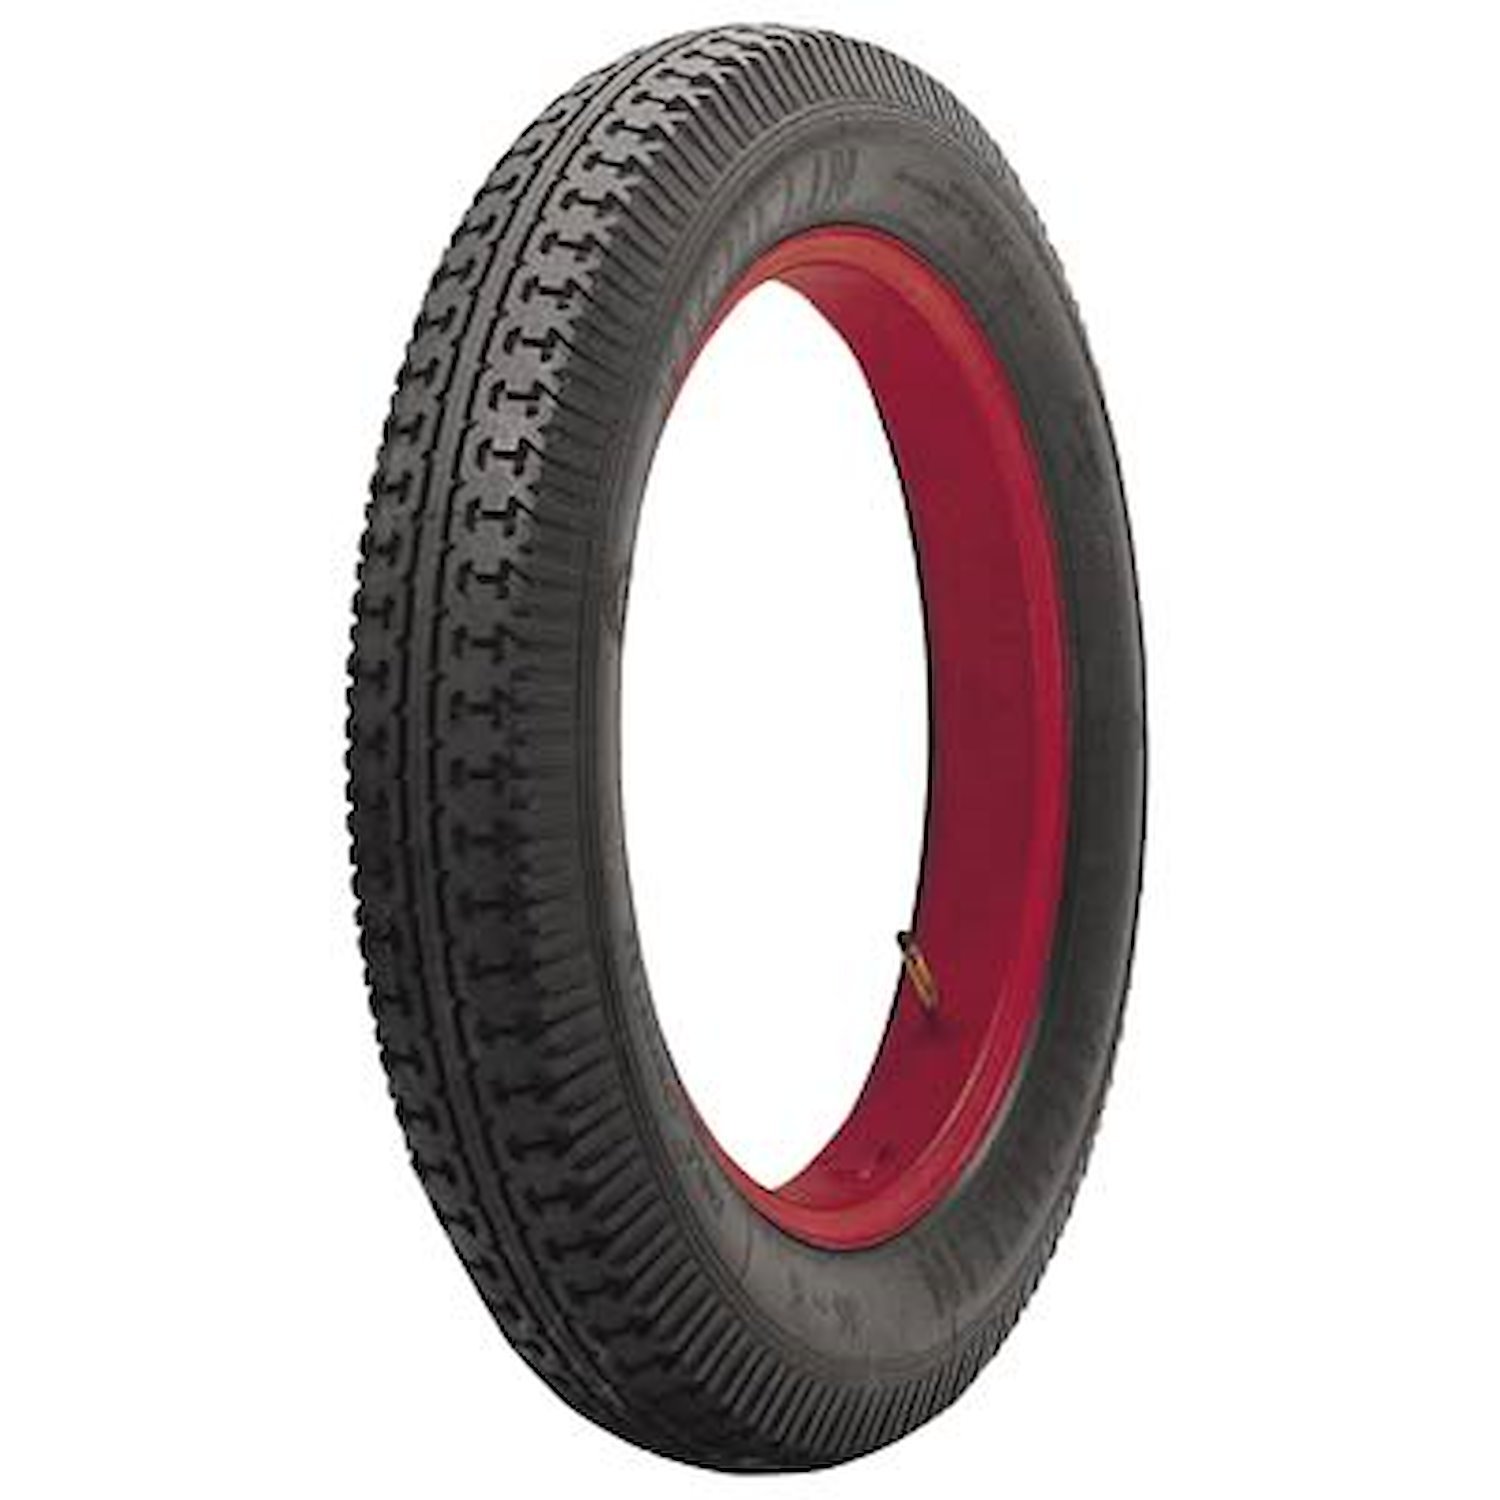 72898 Tire, Michelin Double Rivet, 400/450-19